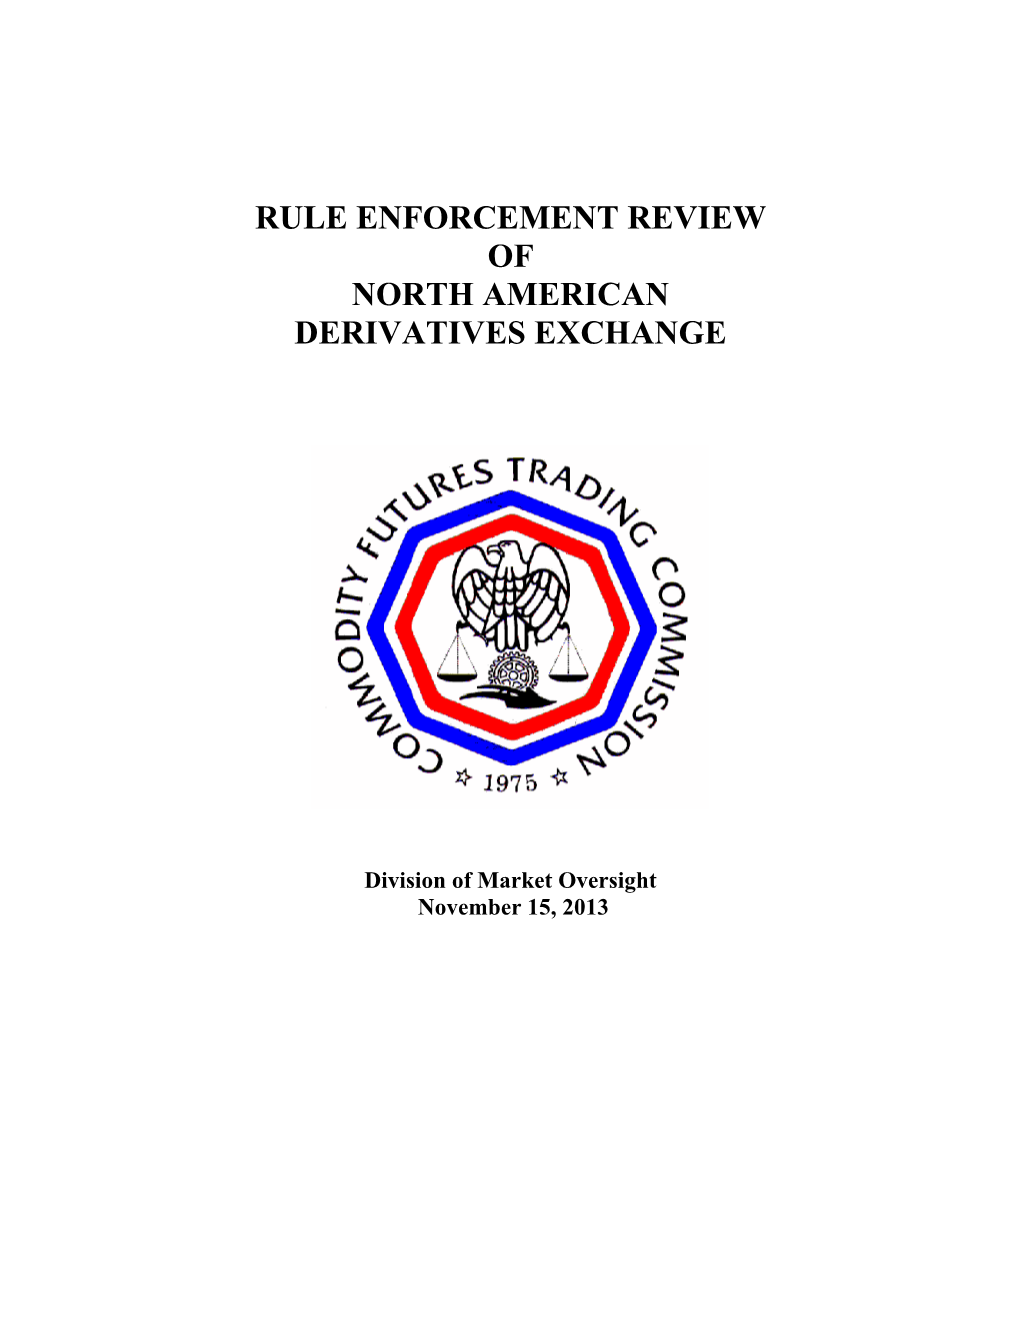 North American Derivatives Exchange Rule Enforcement Review